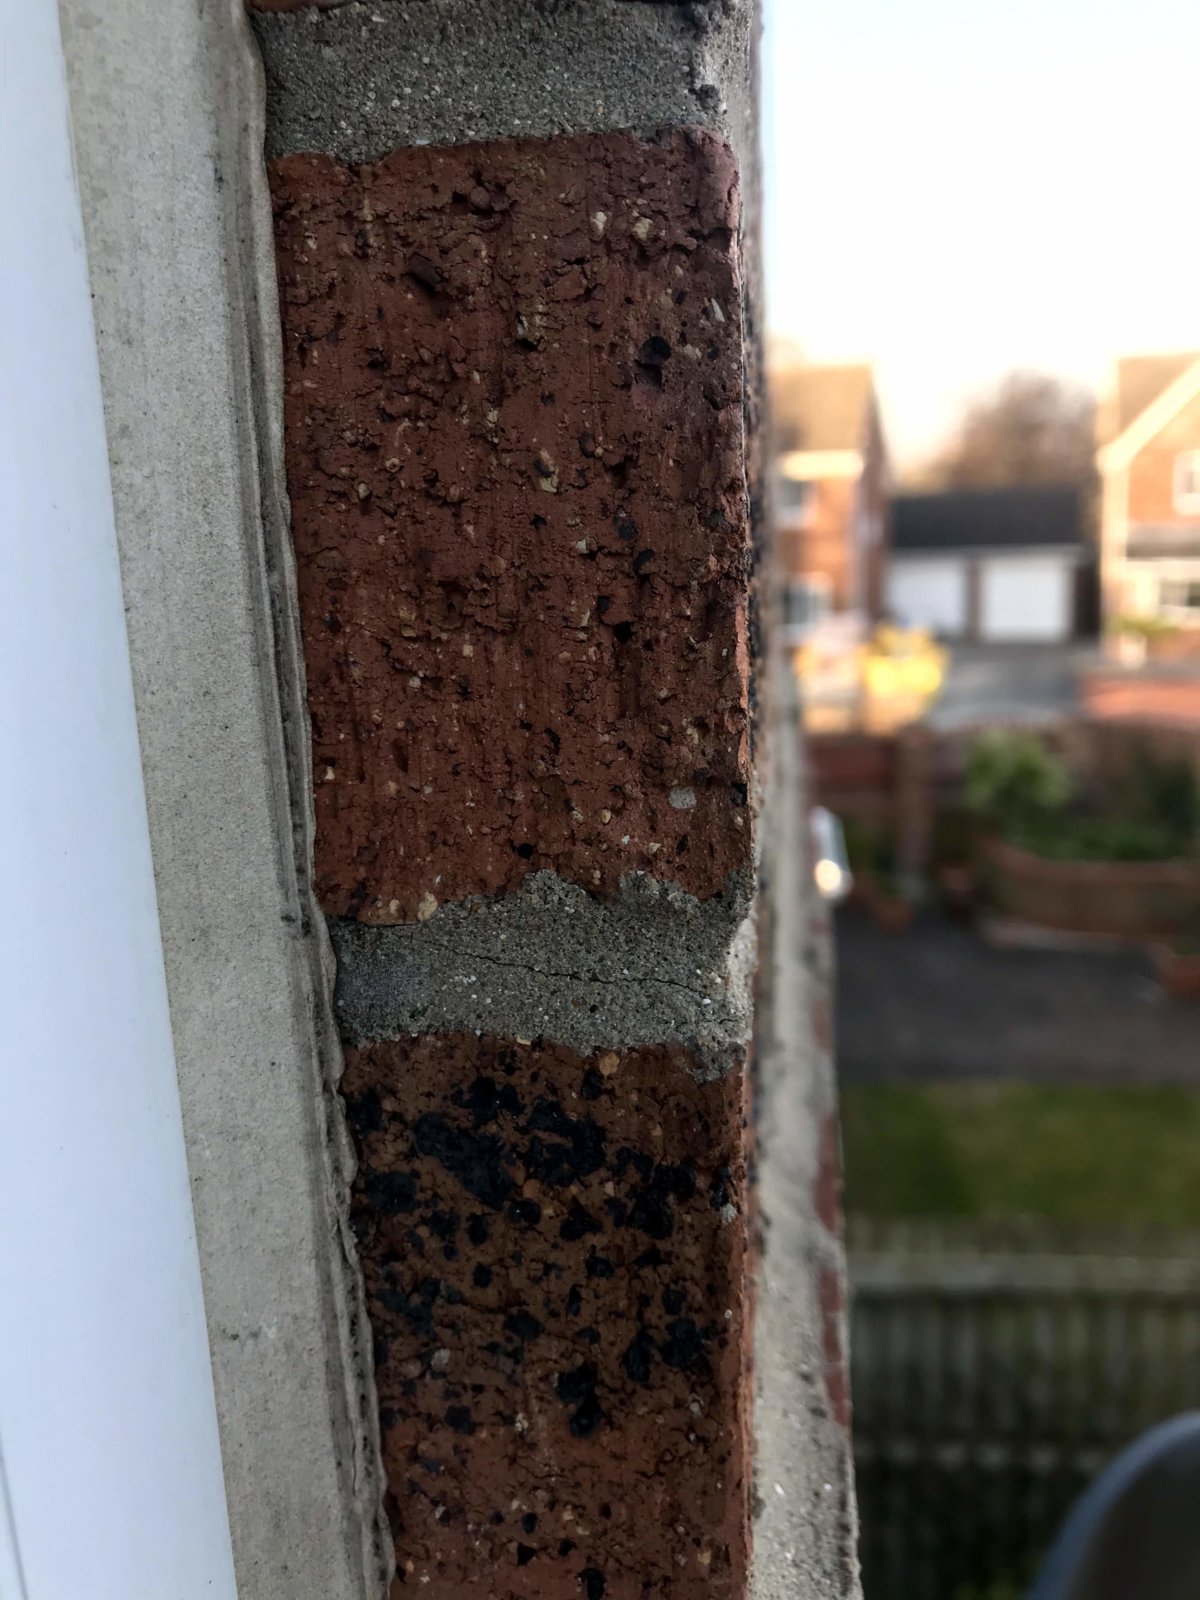 Cracks in Mortar between bricks | DIYnot Forums